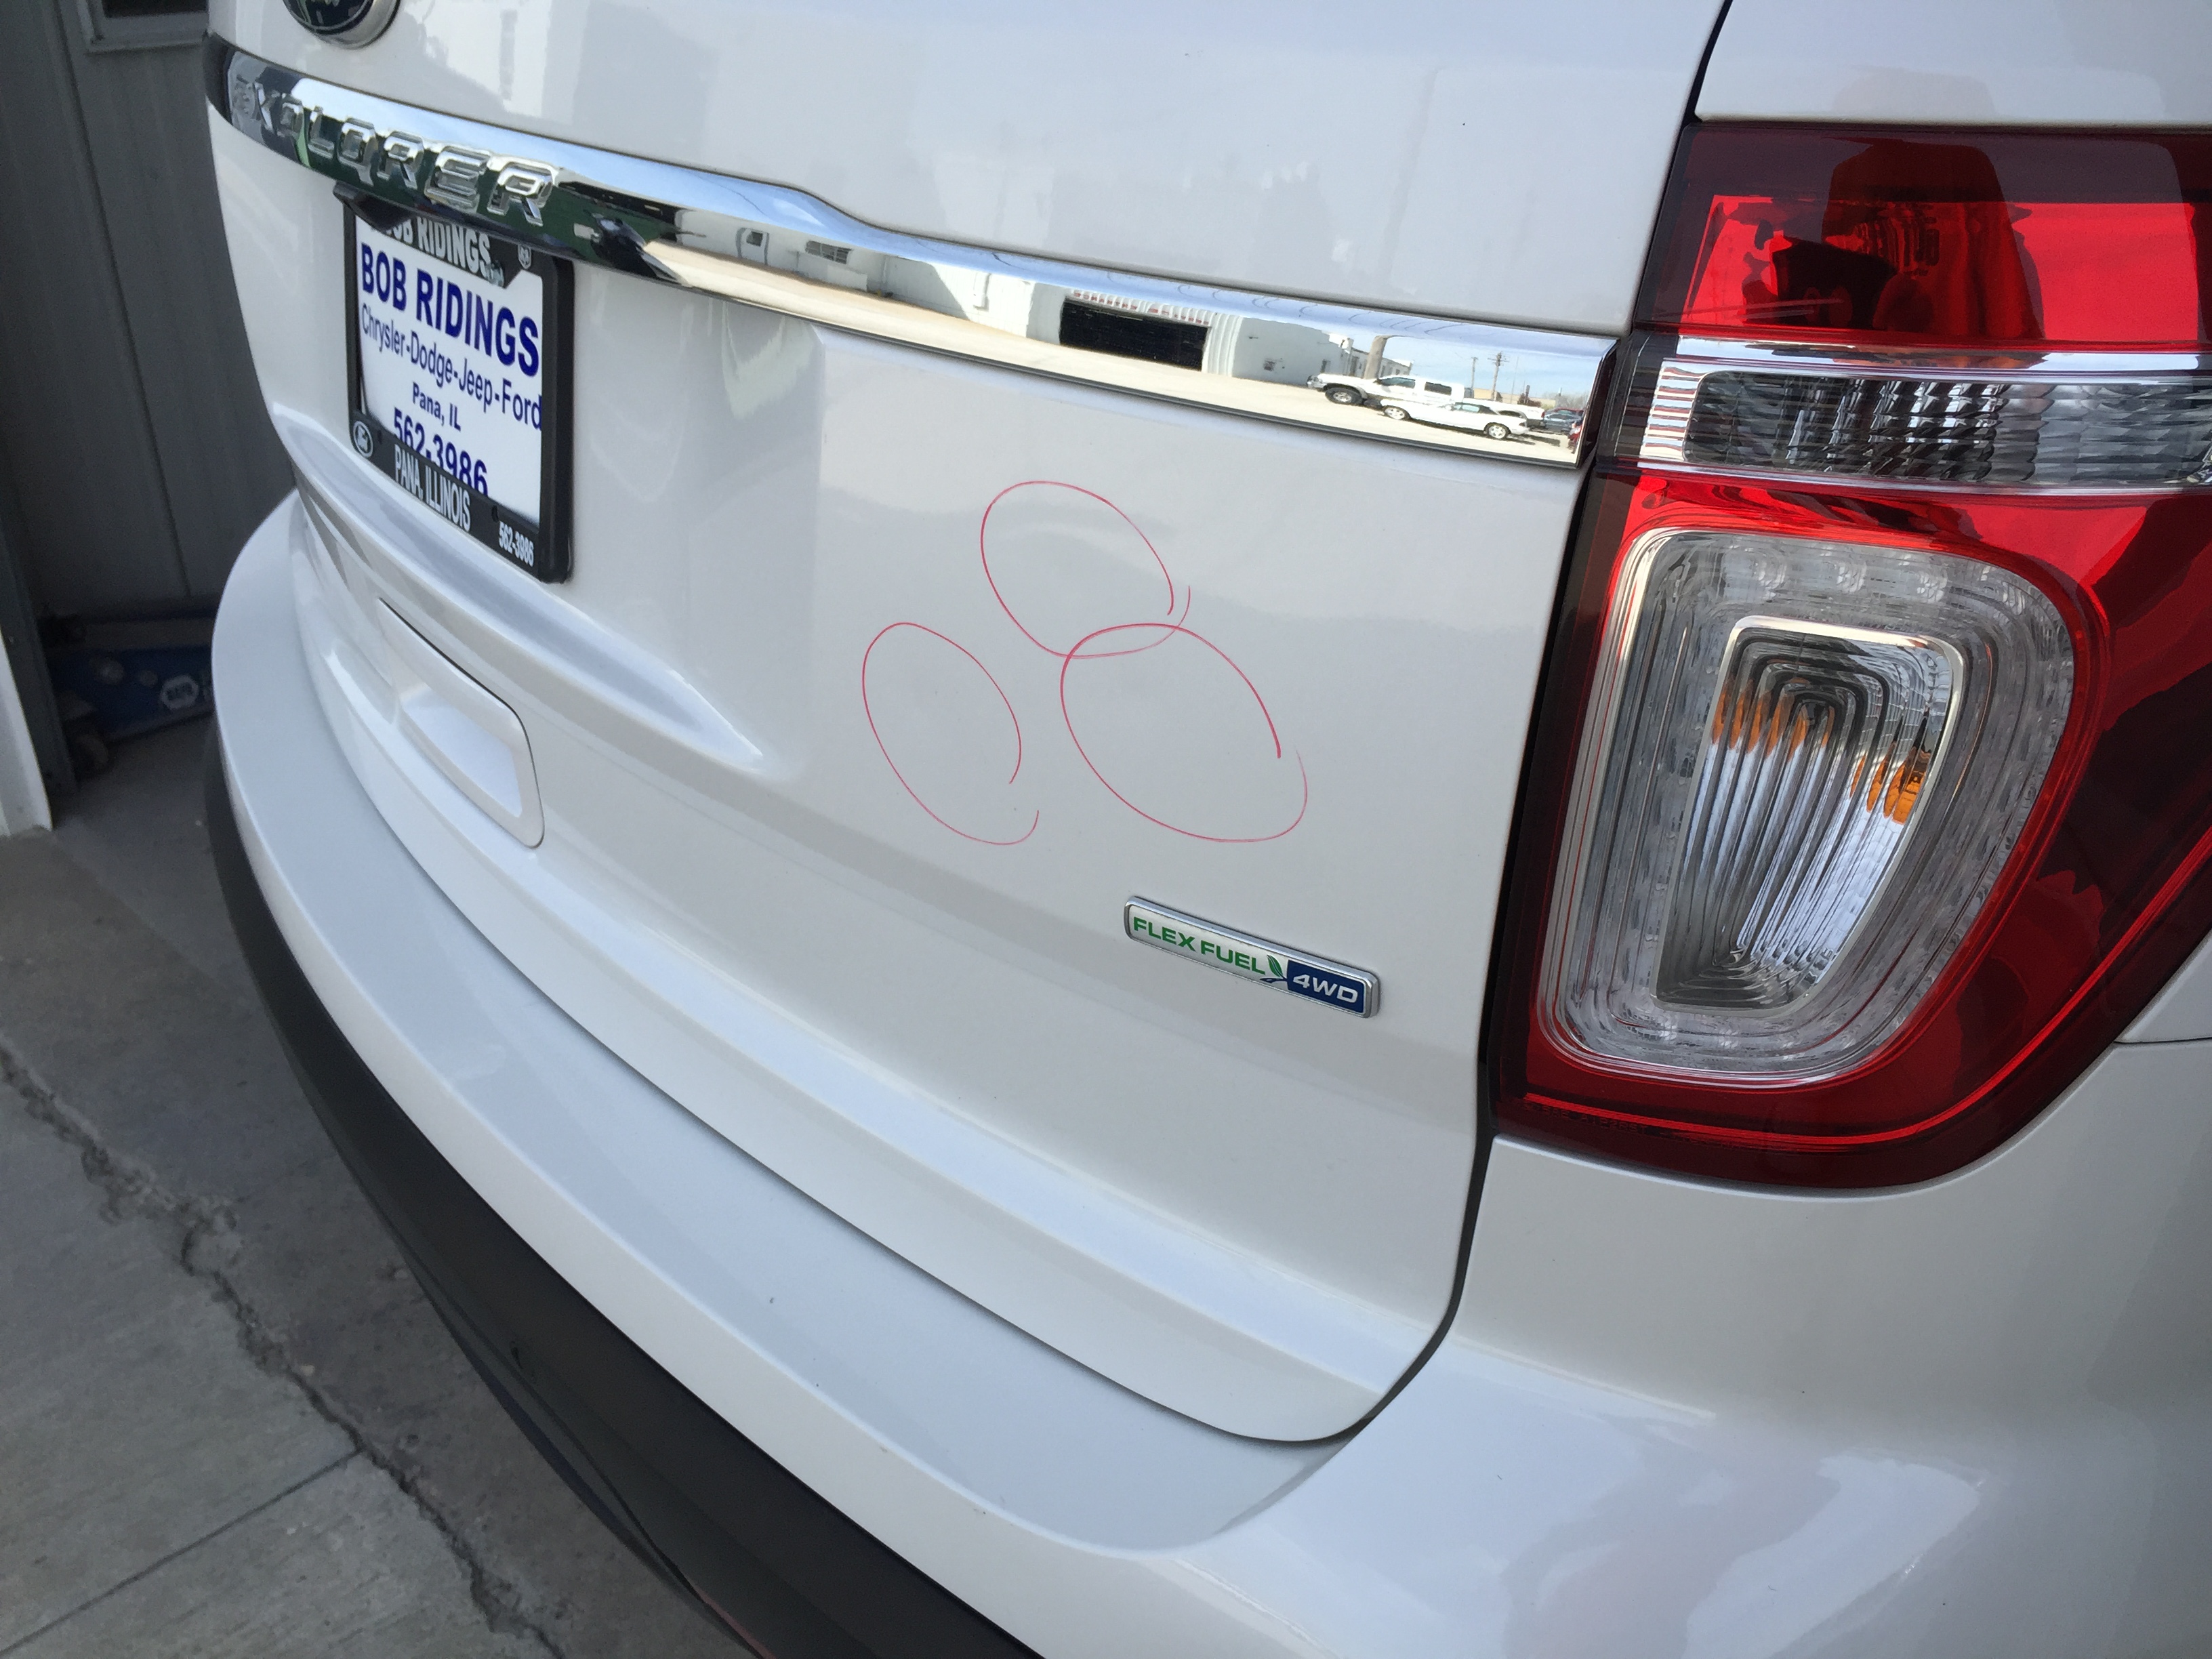 2014 Ford Explorer XLT Tri Coat White, Paintless Dent Repair Rear Gate, Springfield IL, Pana IL Taylorville IL